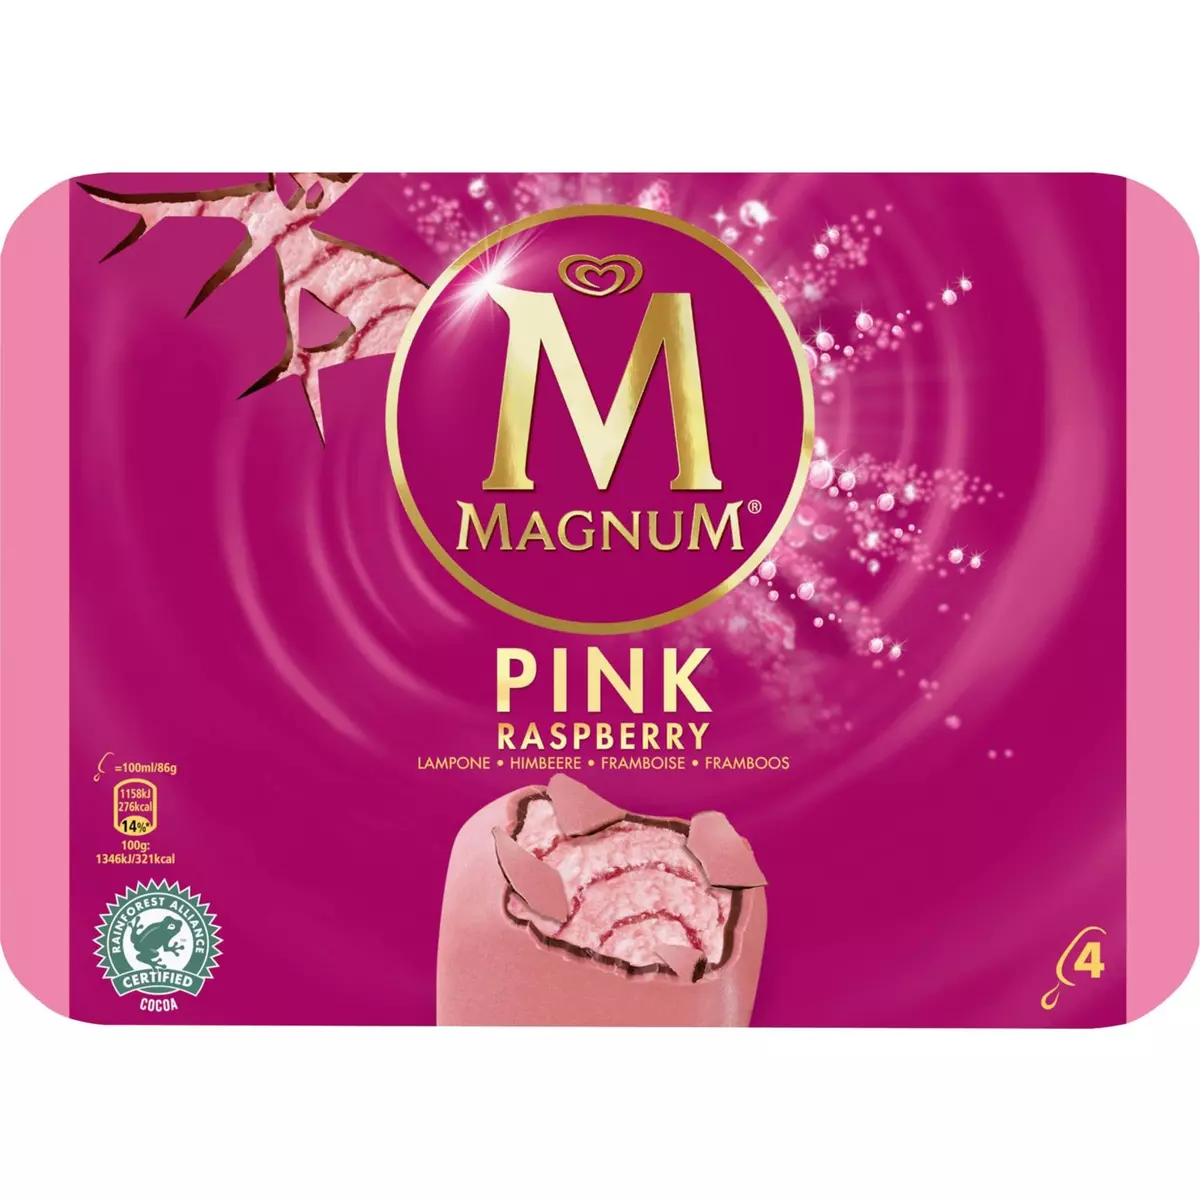 MAGNUM Magnum bâtonnet glace pink framboise x4 -340g